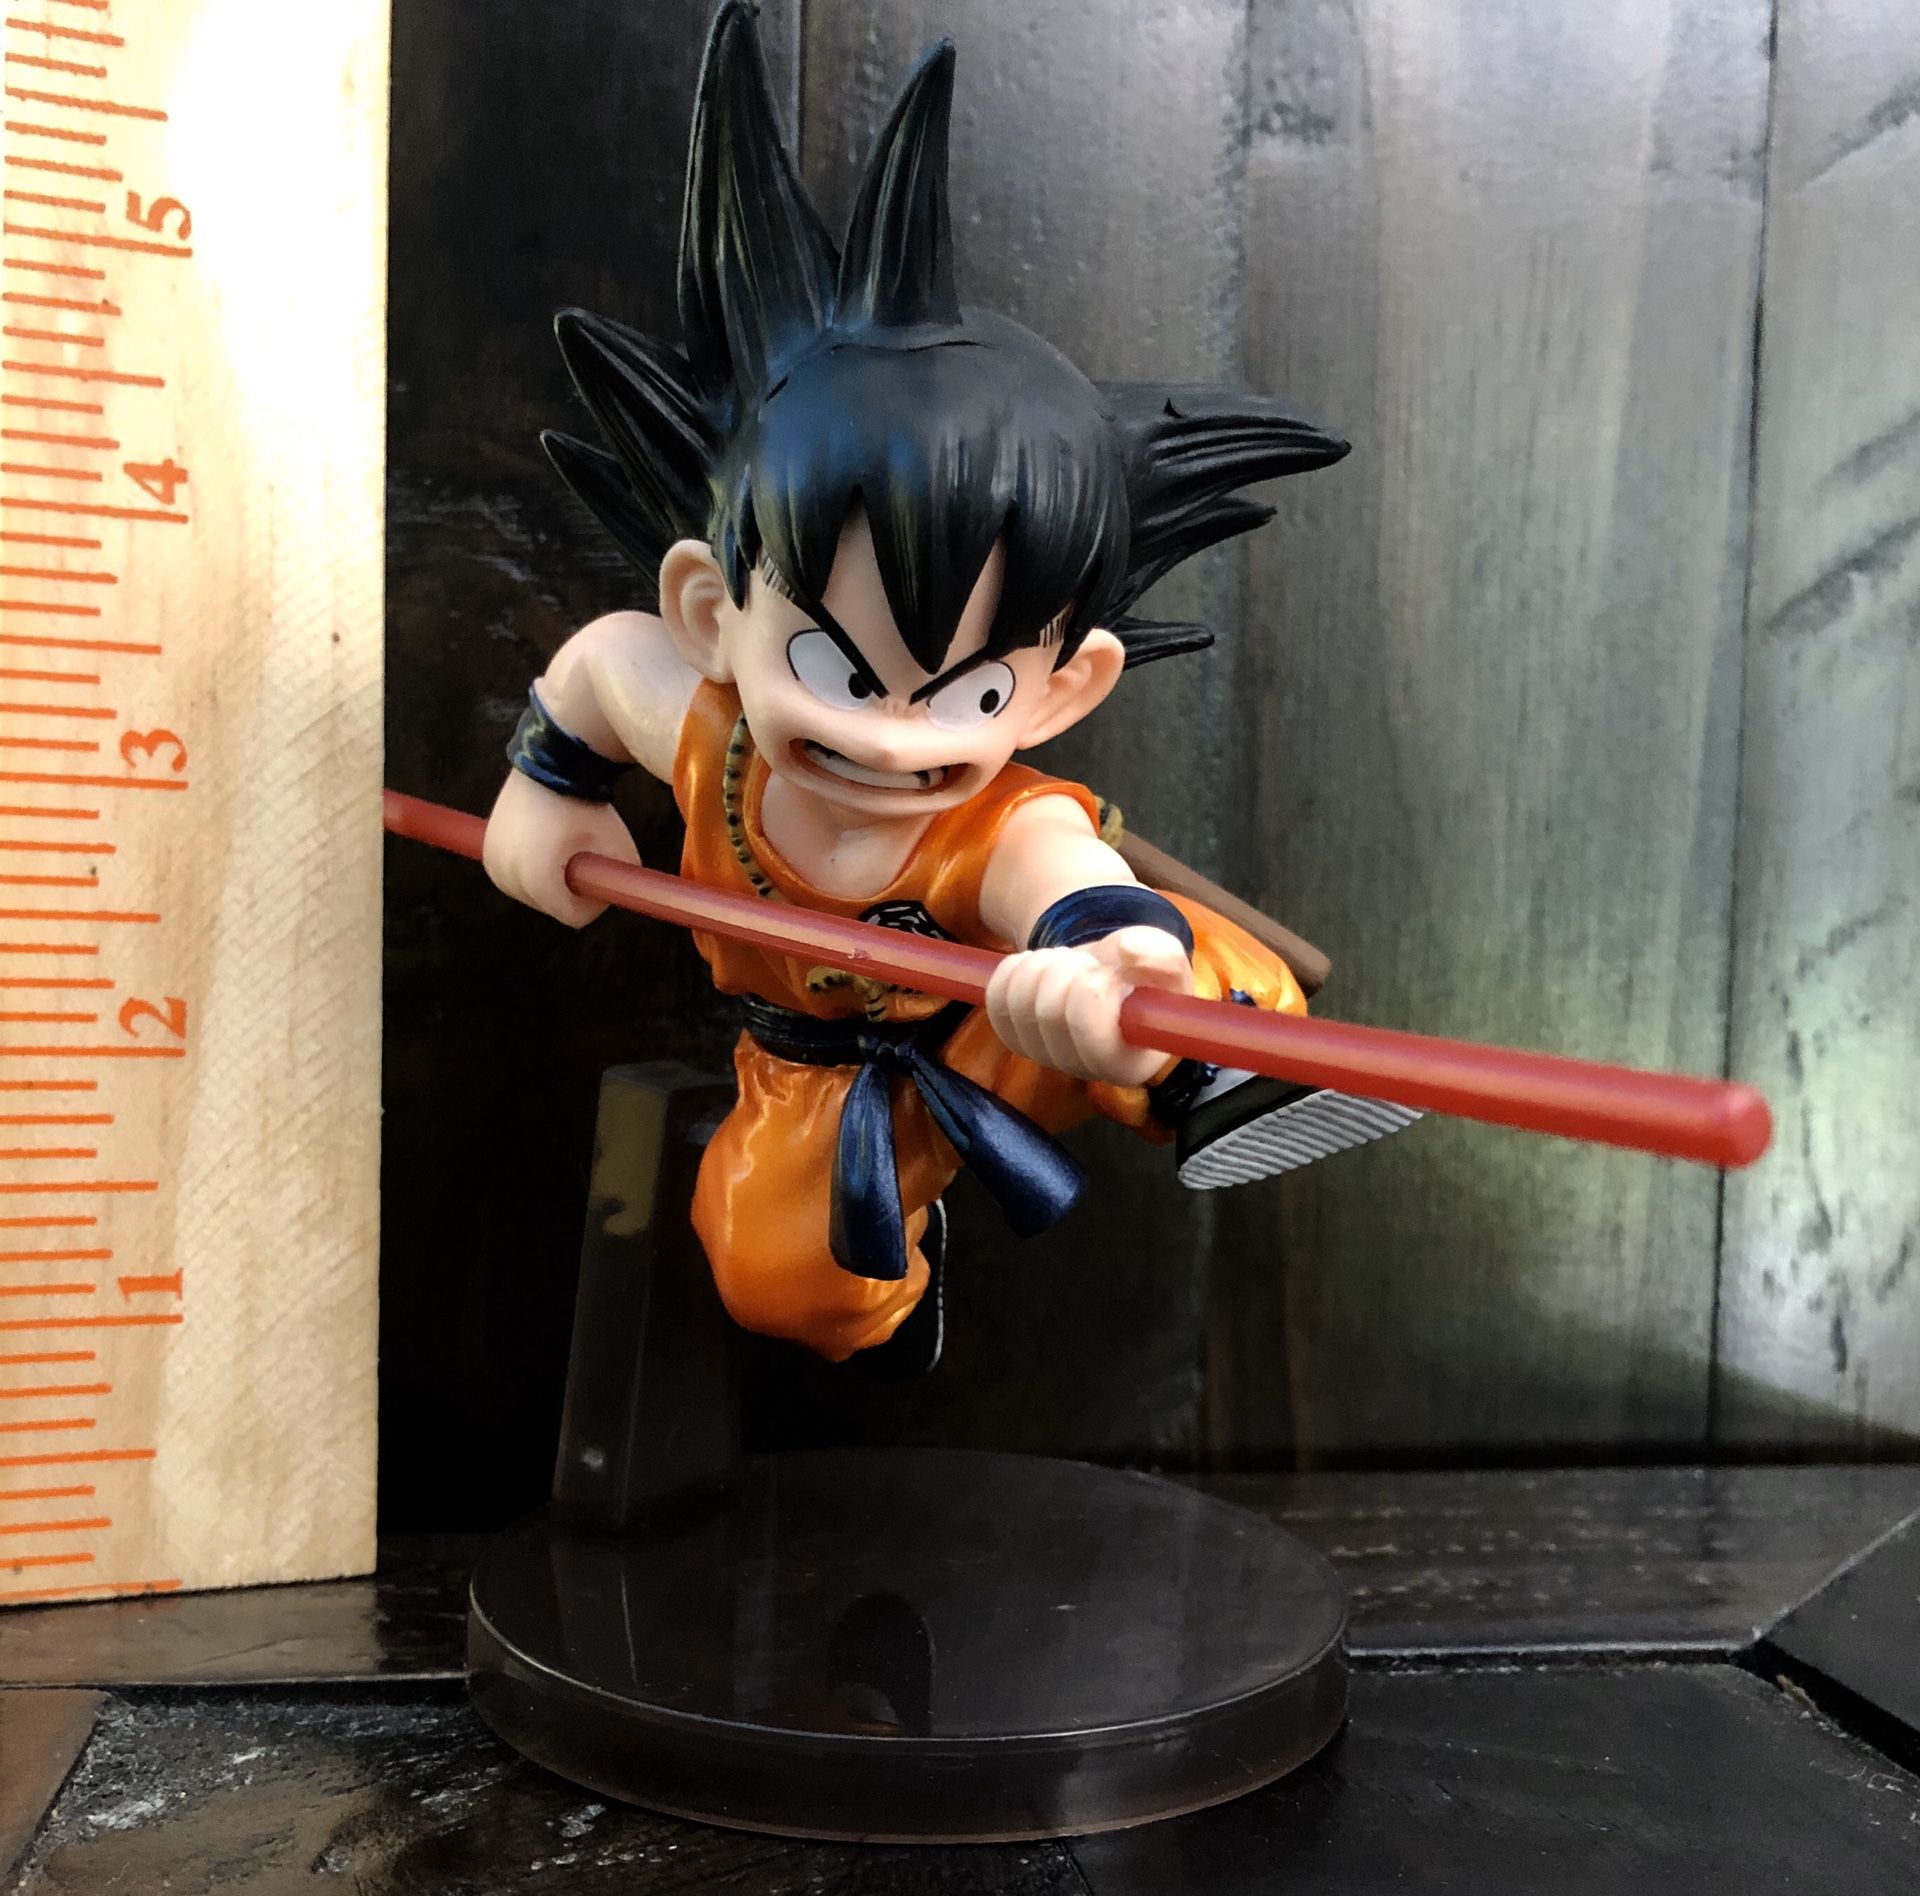 New Goku DRAGON BALL z action figures W/box collection collectibles vintage